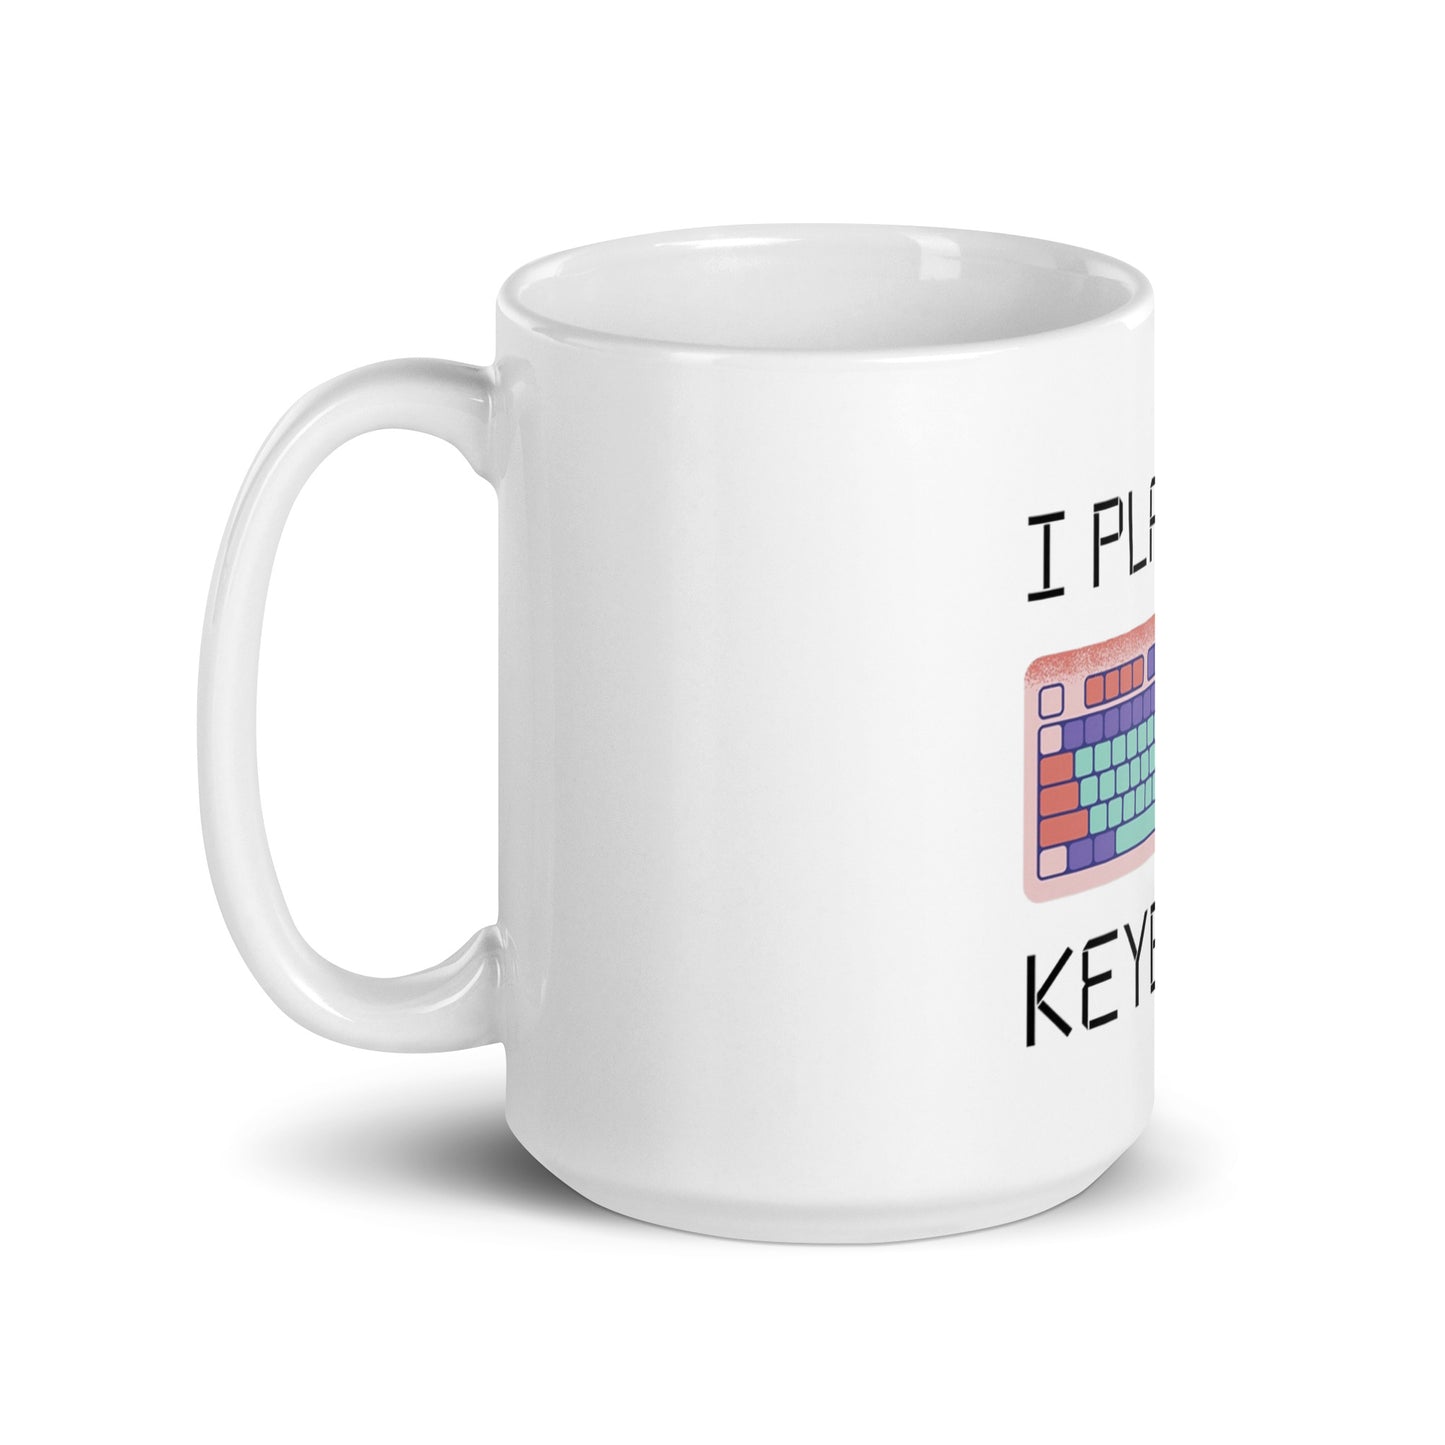 Keyboard mug